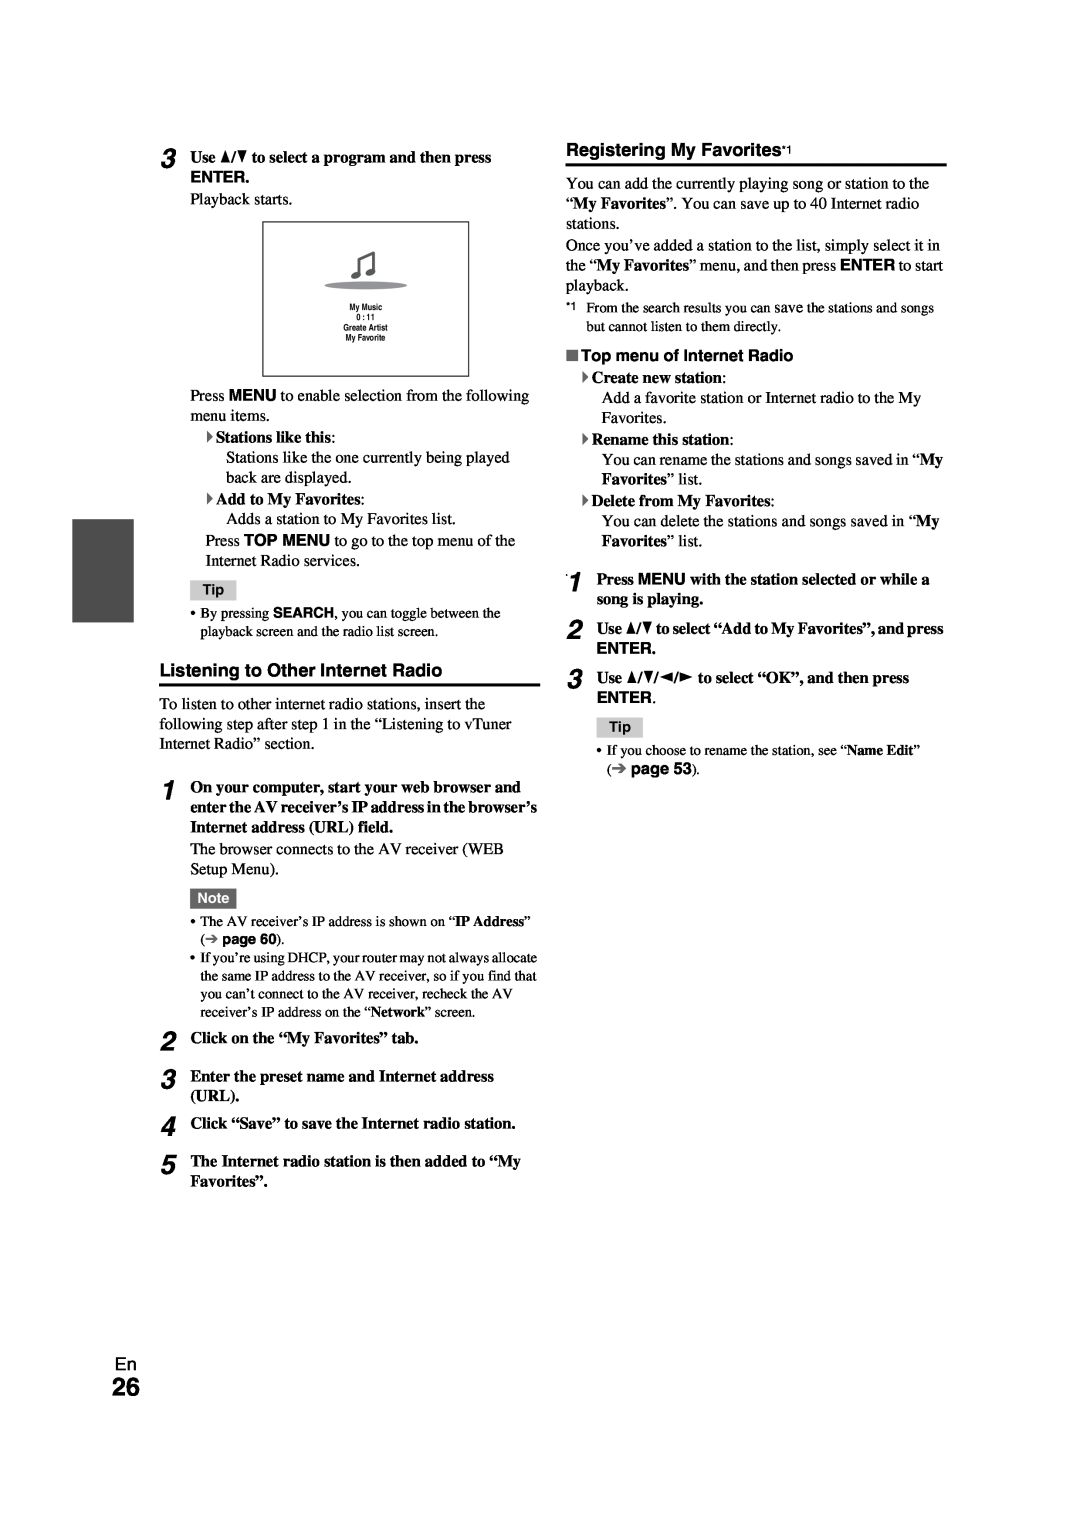 Onkyo TX-NR709 instruction manual Enter, Top menu of Internet Radio, page 